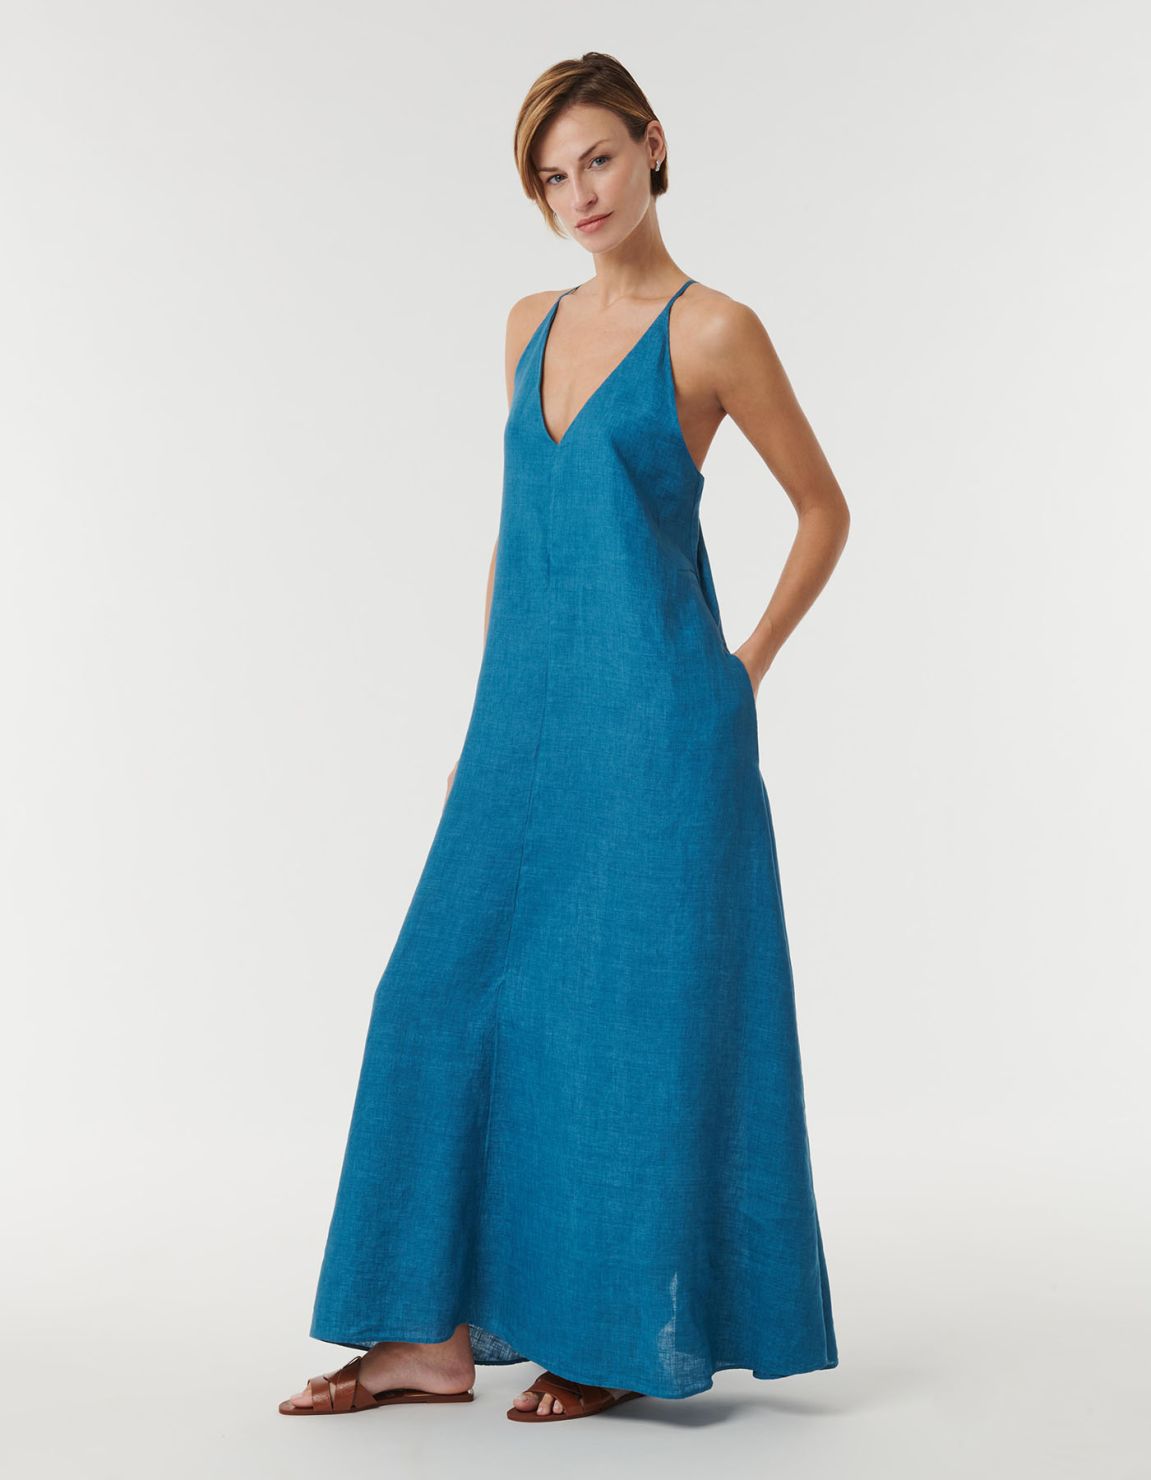 Kleid Pfauenblau Leinen Uni One Size 3